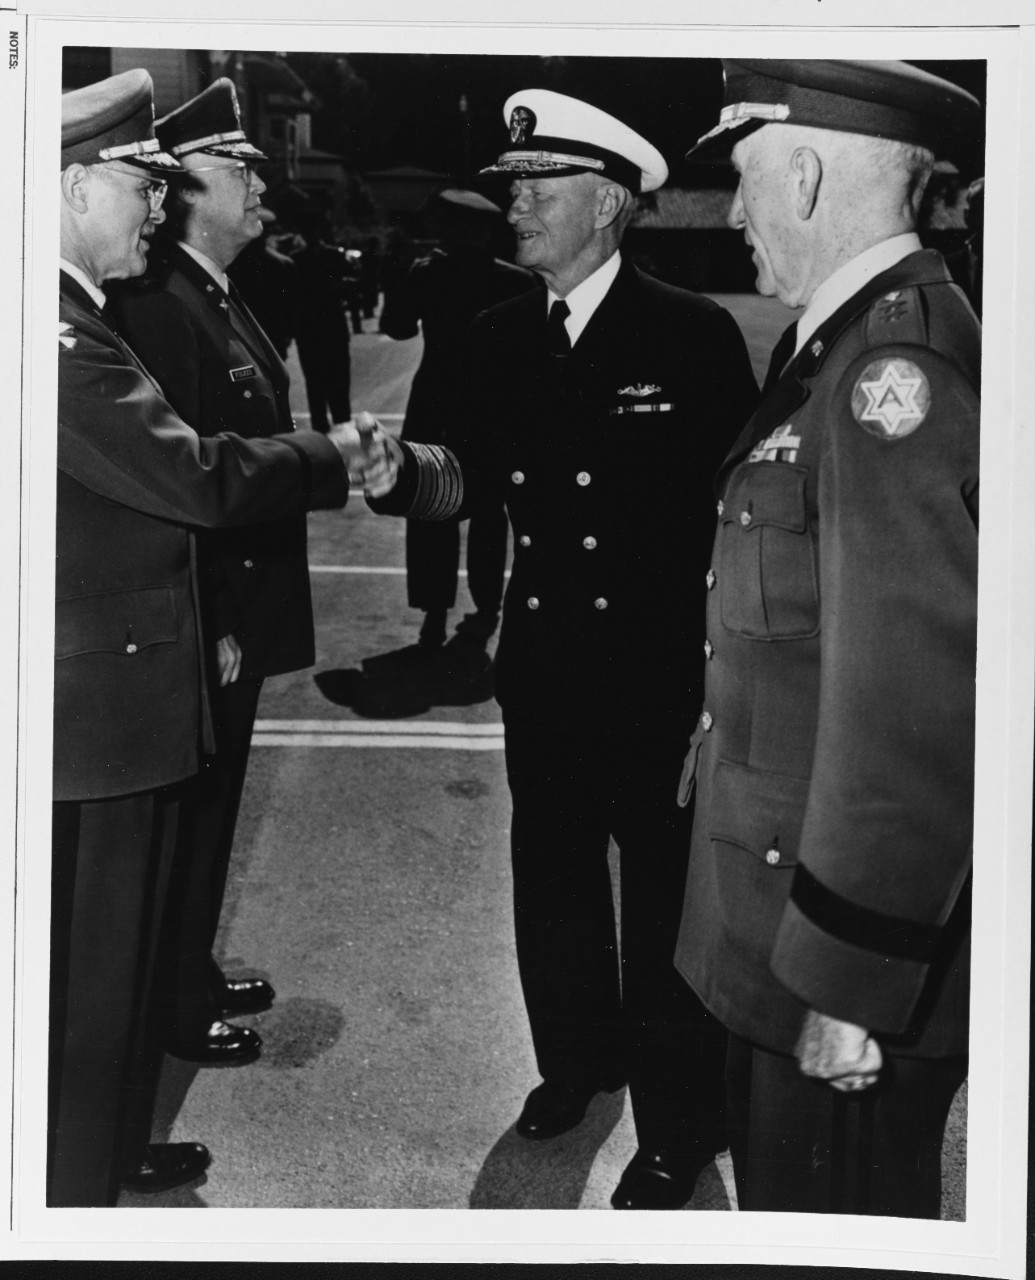 Major General John J. Binns, Sixth U.S. Army, introduces Fleet Admiral Nimitz, USN, to Colonel R.G. Miller